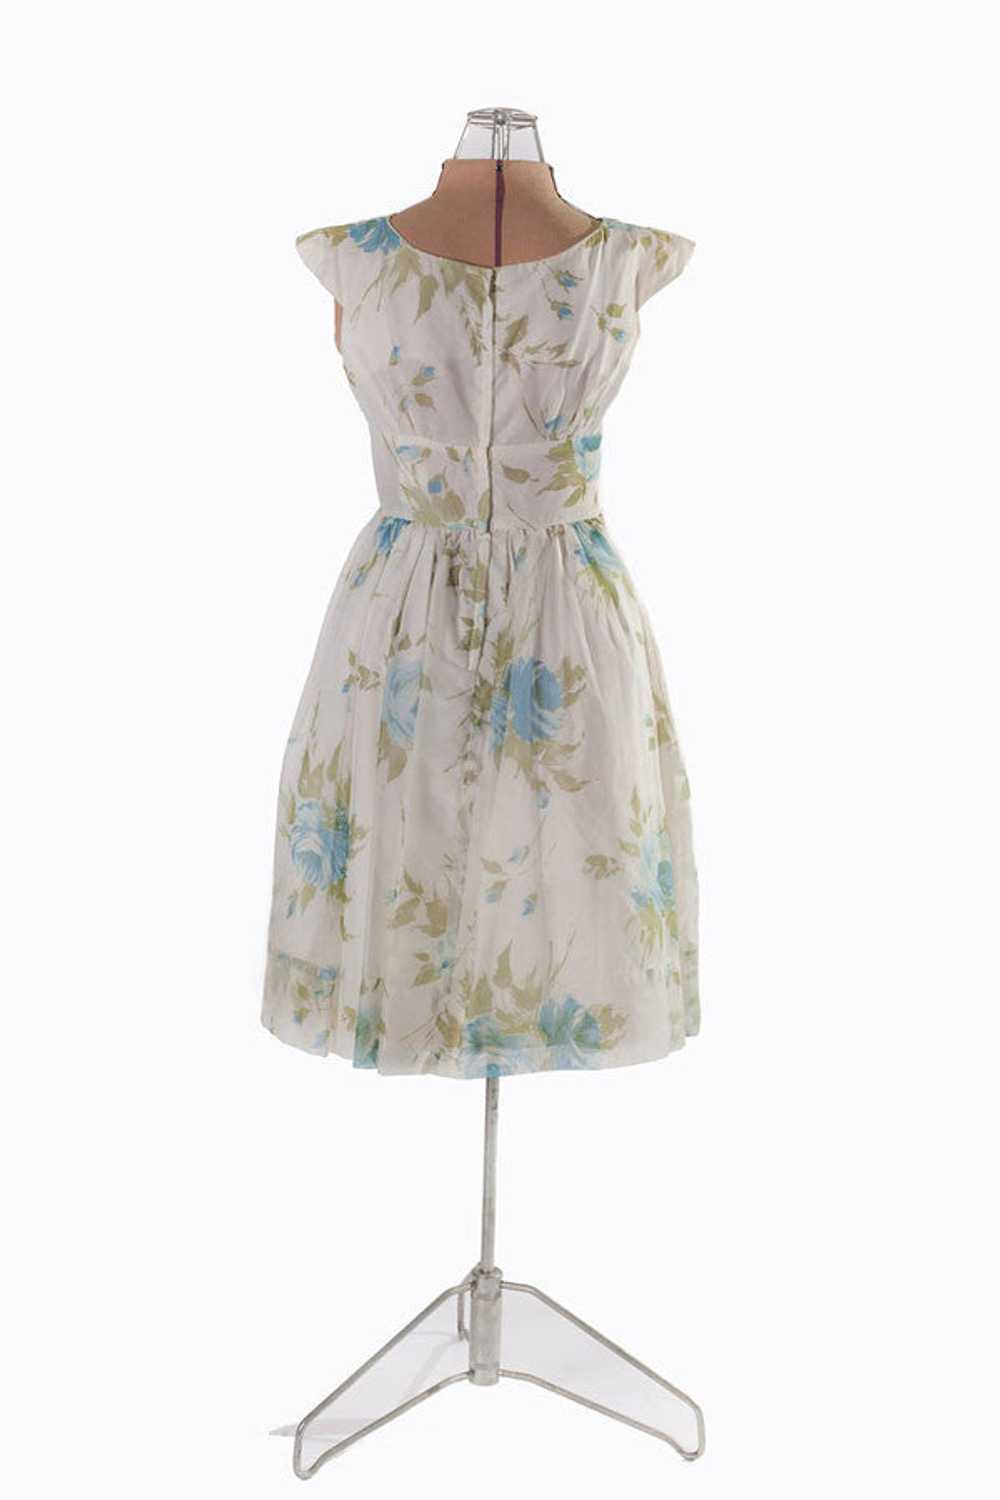 1950s Blue Floral Chiffon Party Dress - image 5